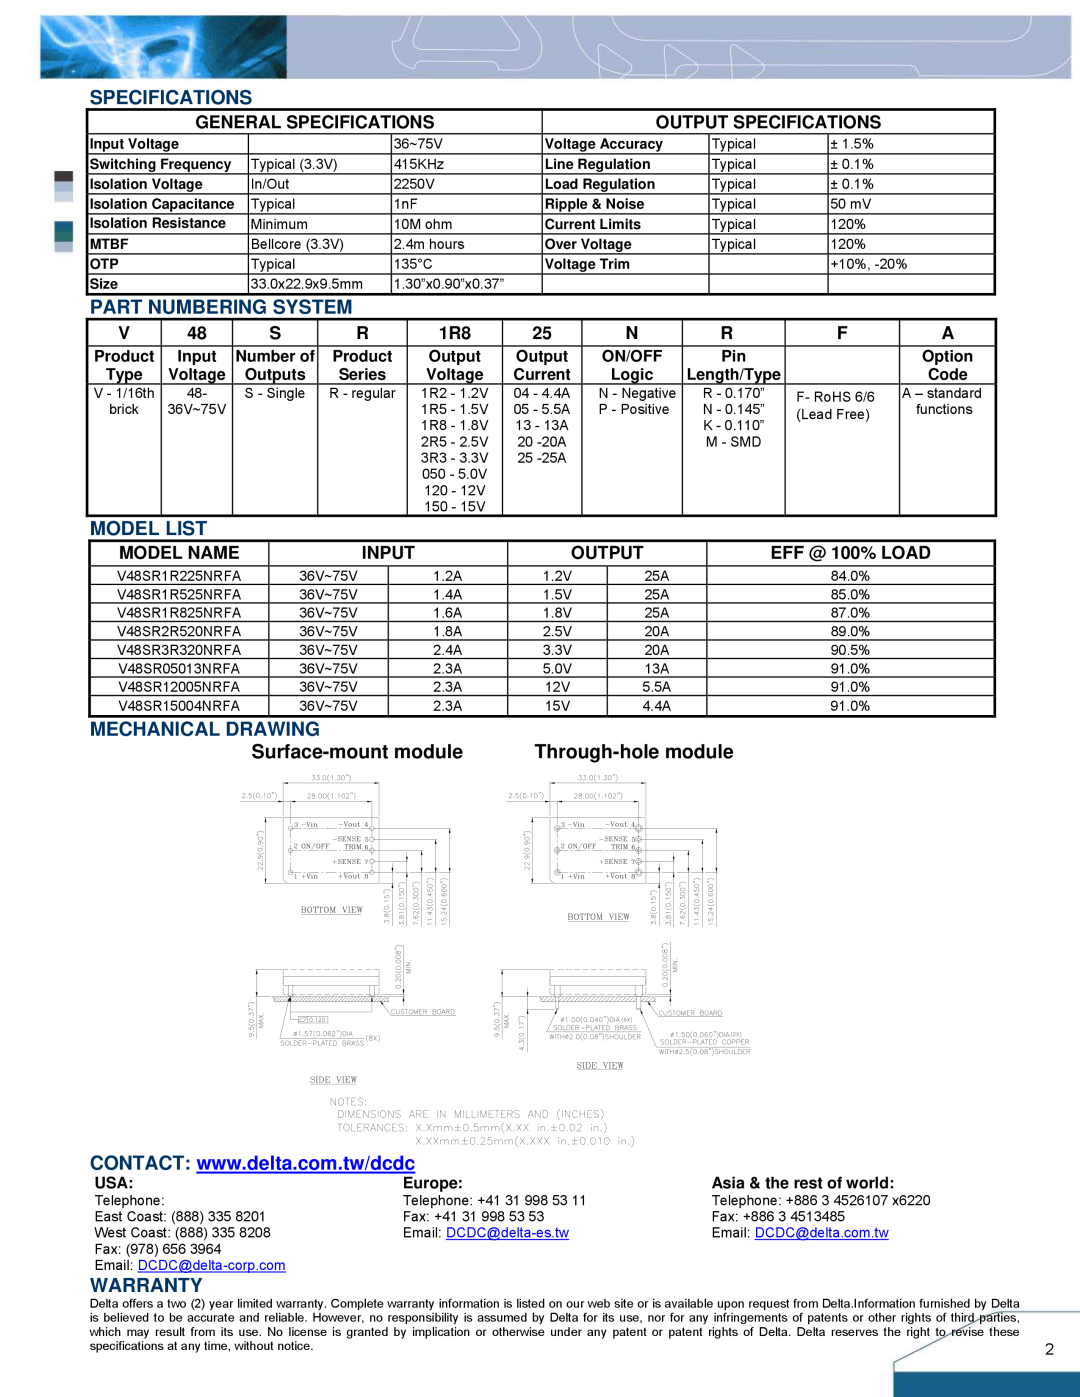 Delta Electronics V48SR Specifications, System, Model List, Mechanical Drawing, Warranty, Surface-mount module, Model Name 